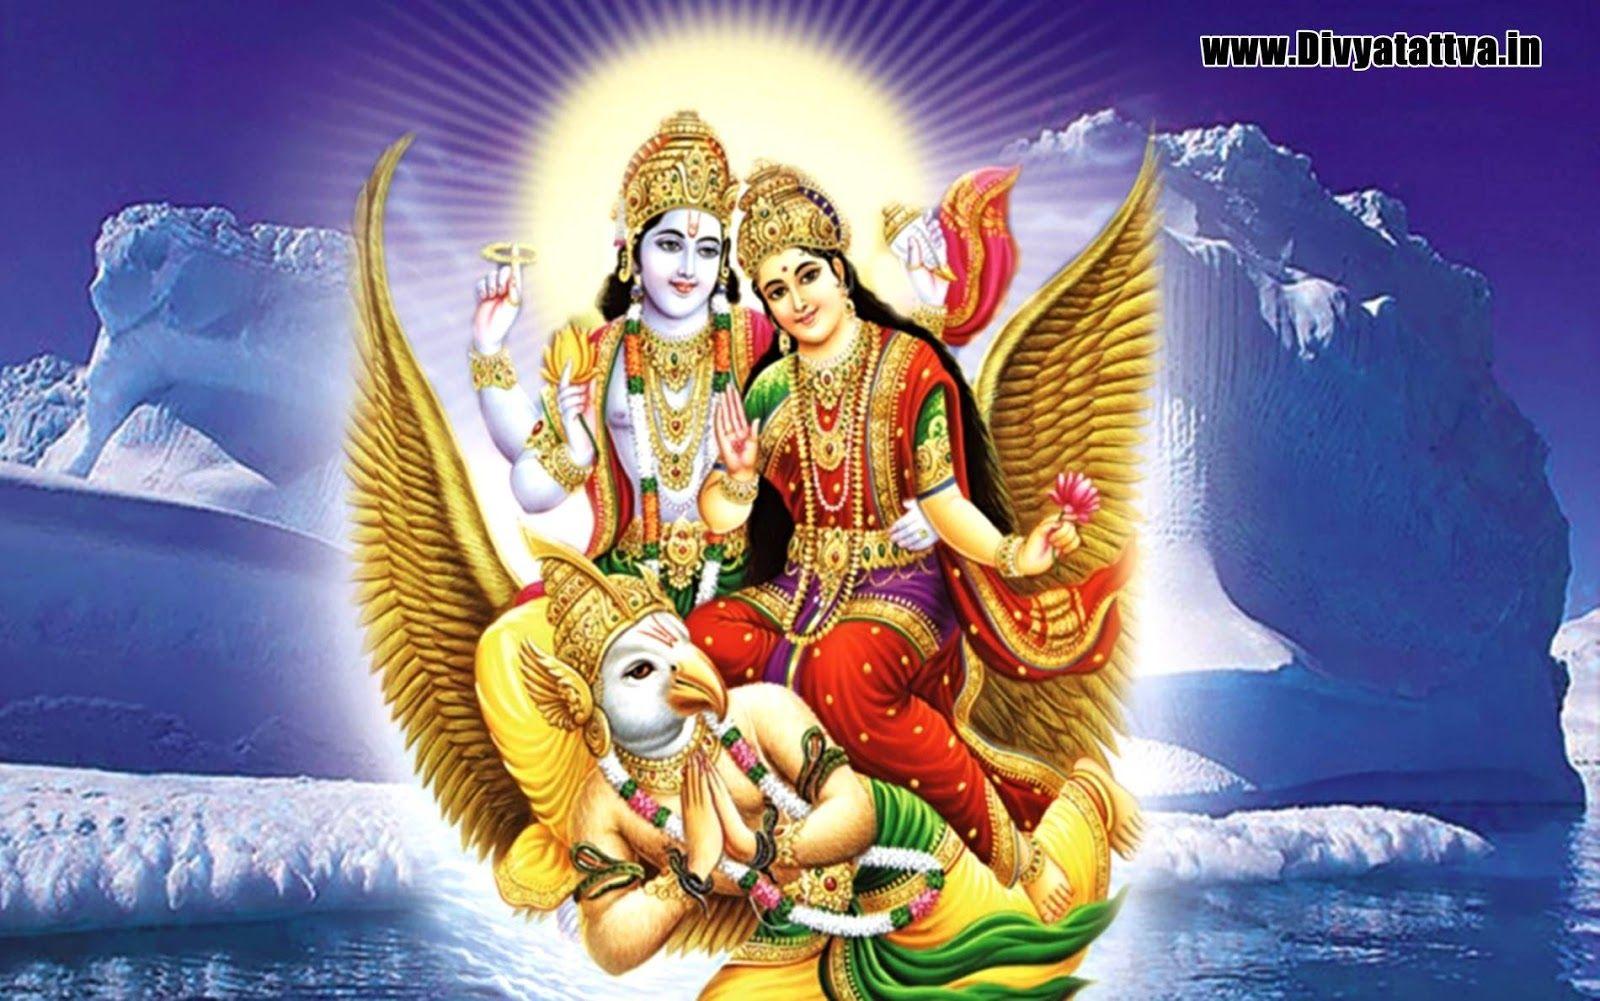 Divyatattva Astrology Free Horoscopes Psychic Tarot Yoga Tantra Occult Image Videos, Lord Vishnu HD Wallpaper Goddess Luxmi With Garuda Background Image